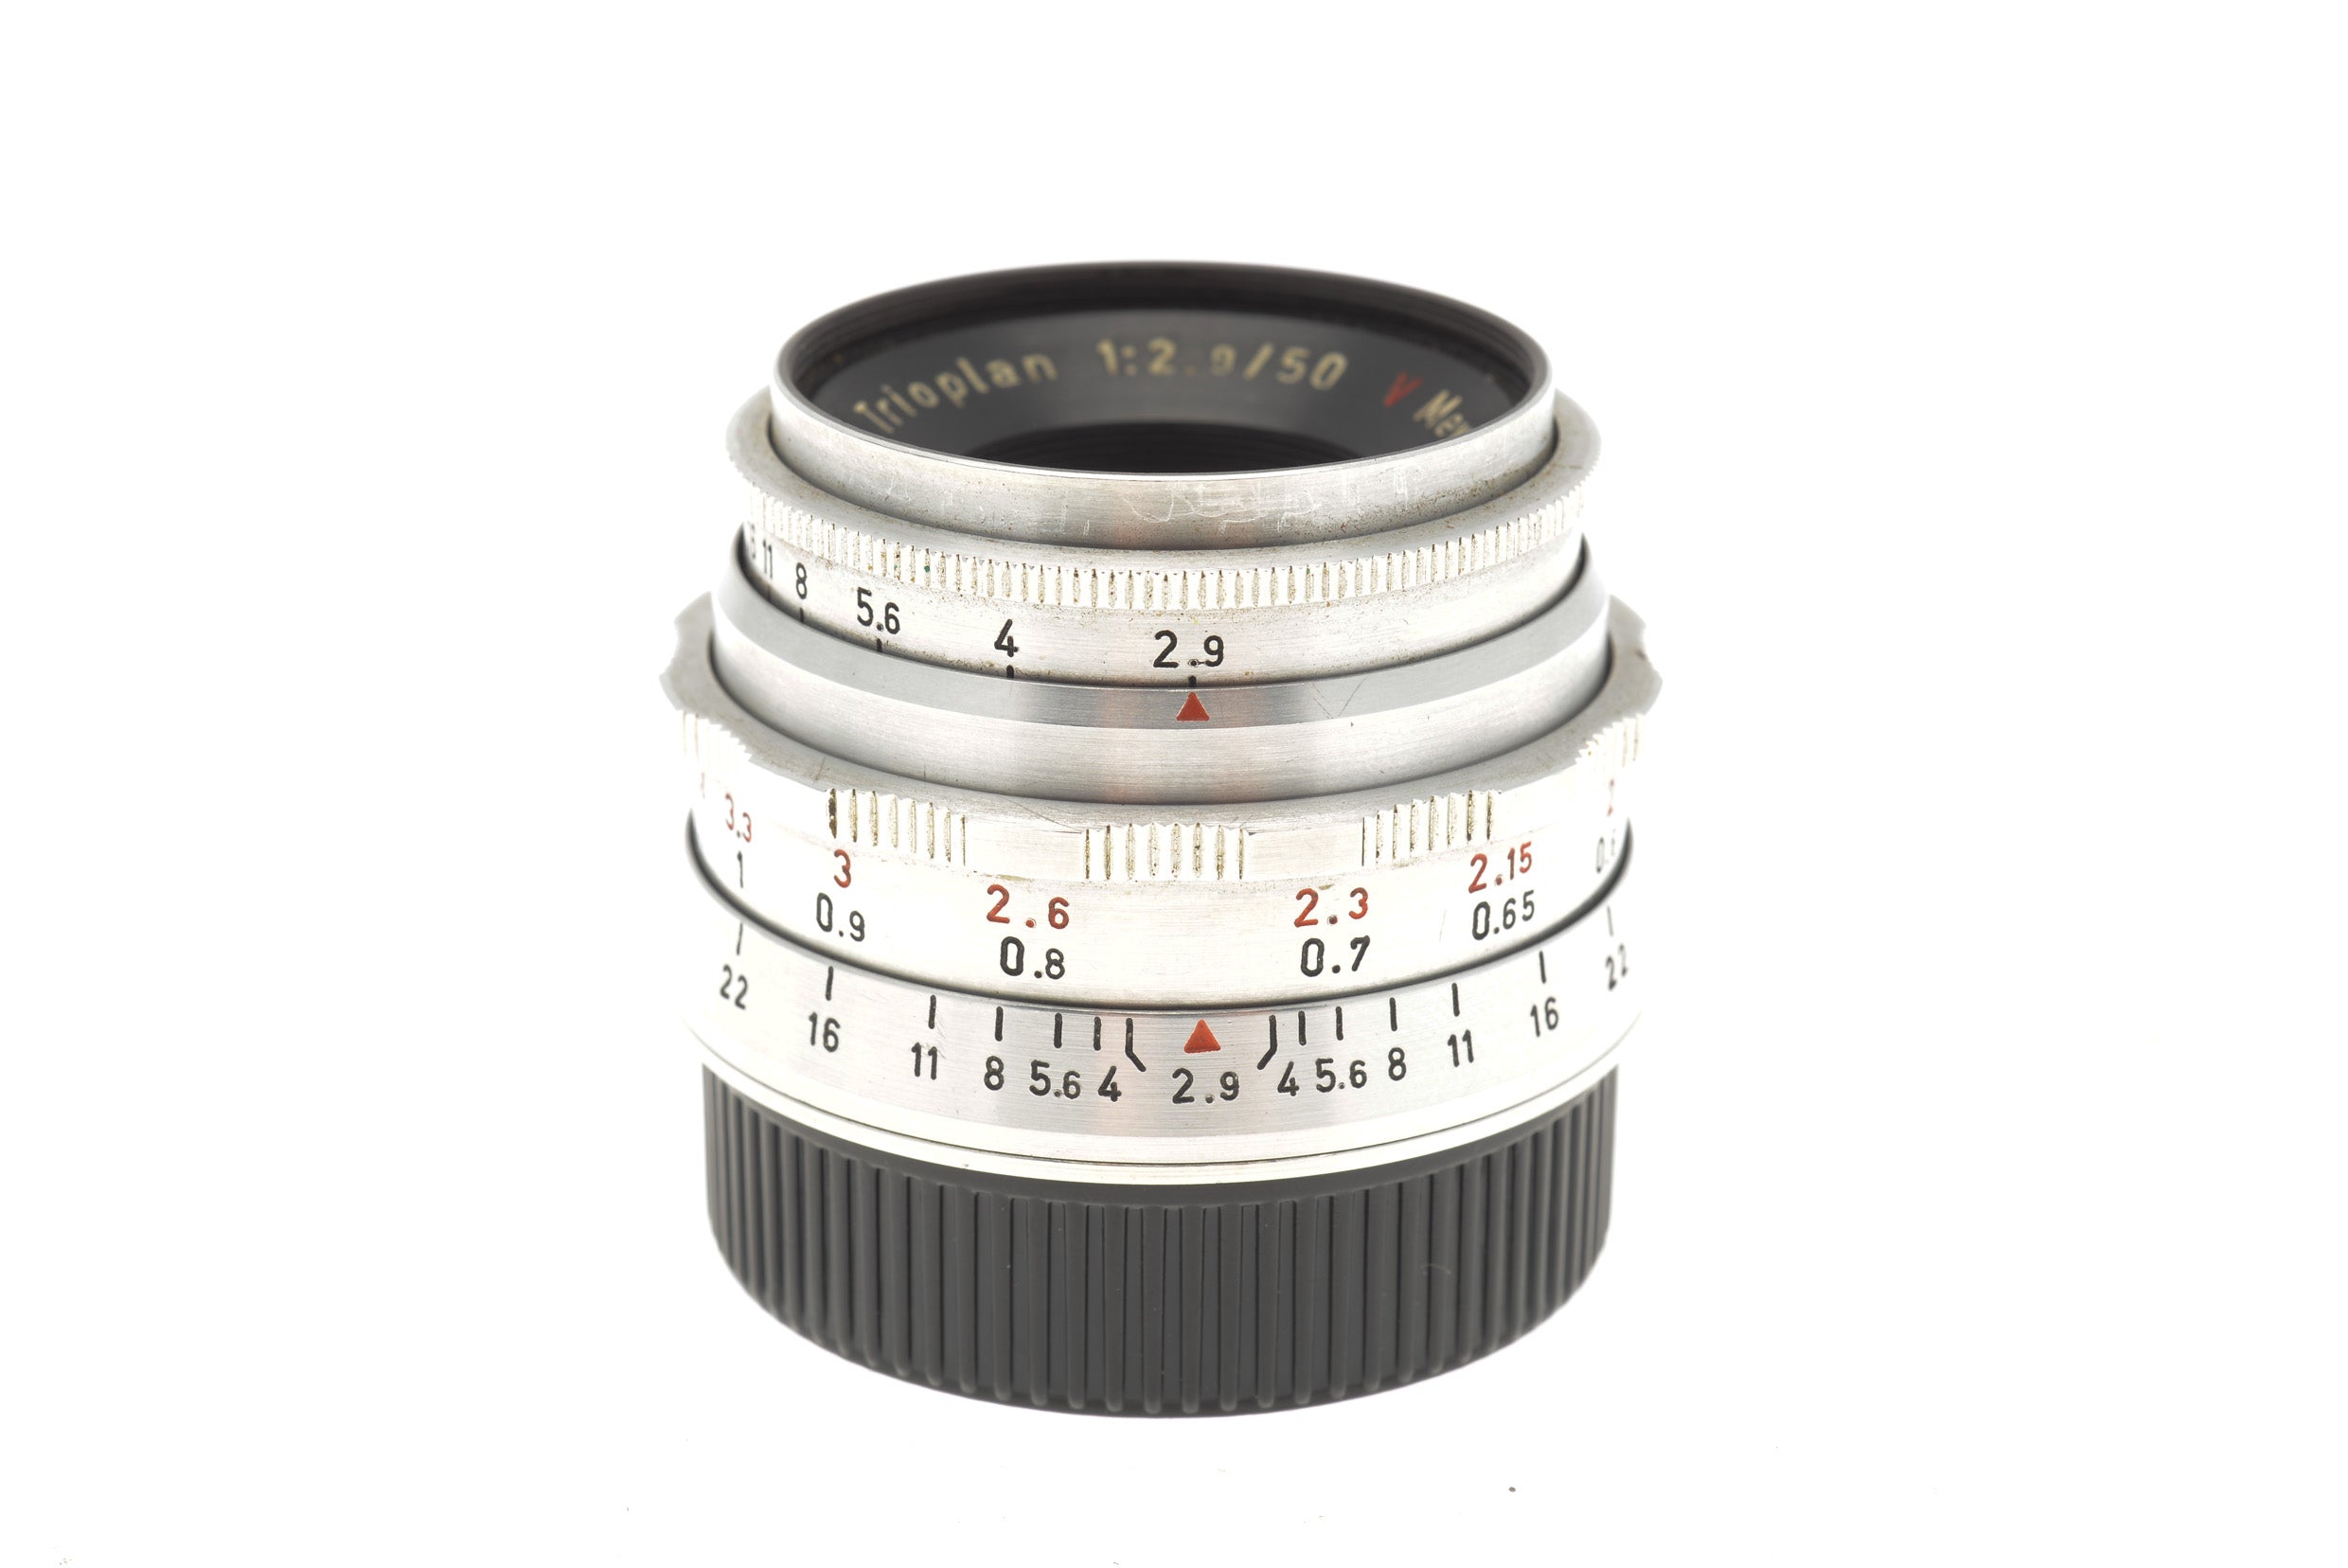 Meyer-Optik Görlitz 50mm f2.9 Trioplan - Lens